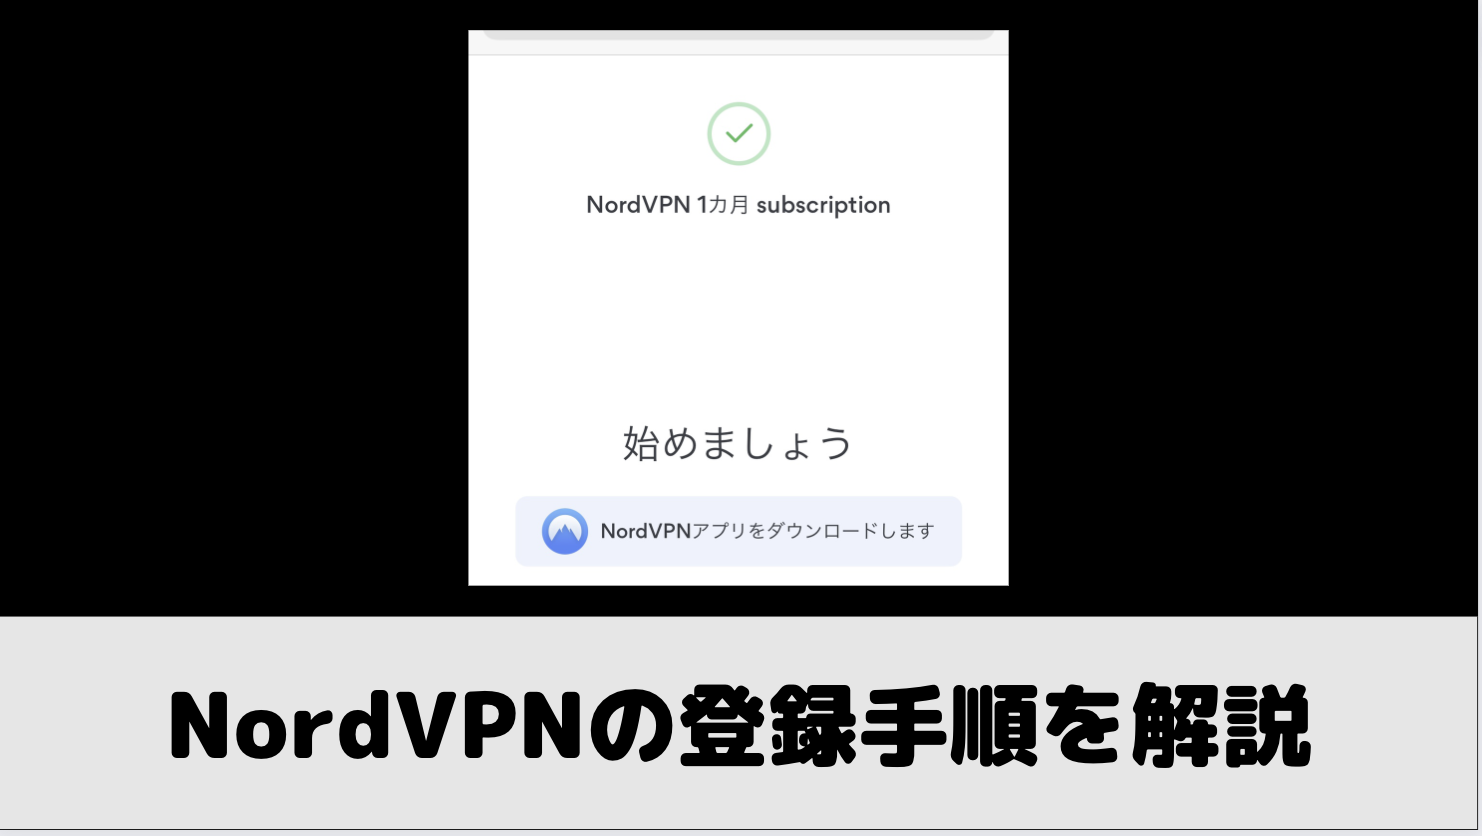 NordVPNの登録方法を画像と動画で解説！【2分で簡単】